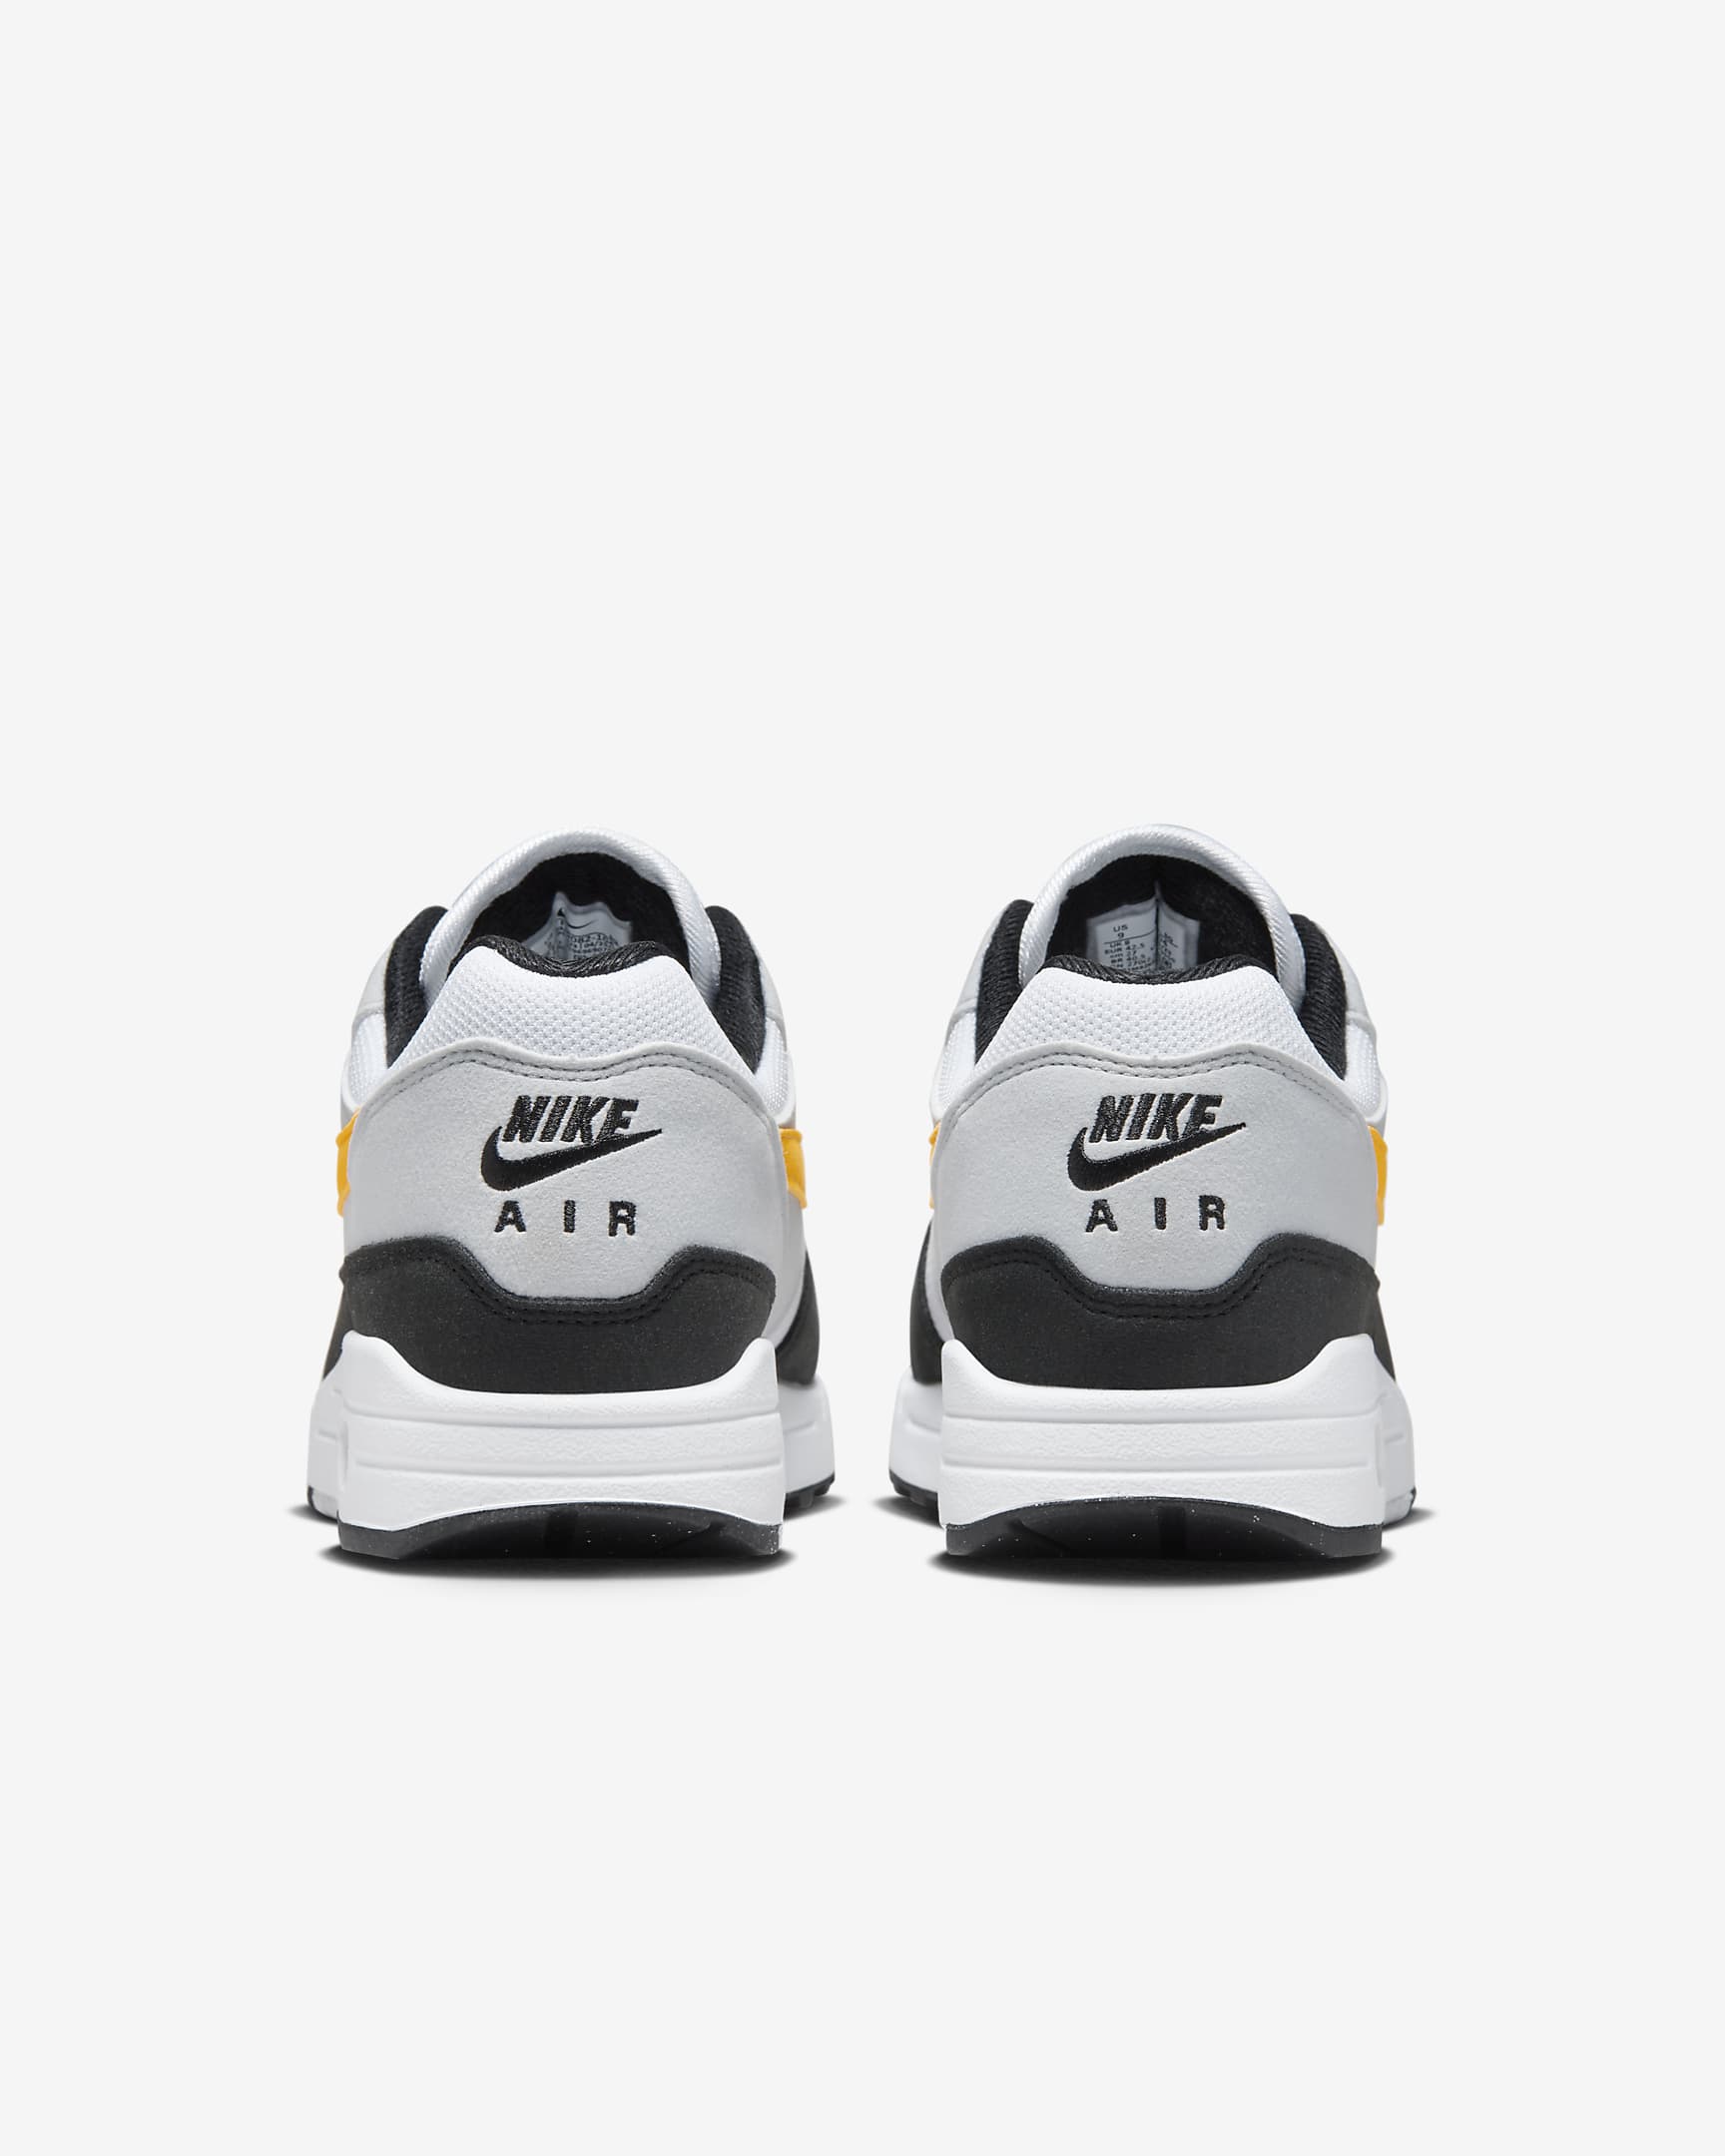 Nike Air Max 1 Men's Shoes - White/Black/Pure Platinum/University Gold